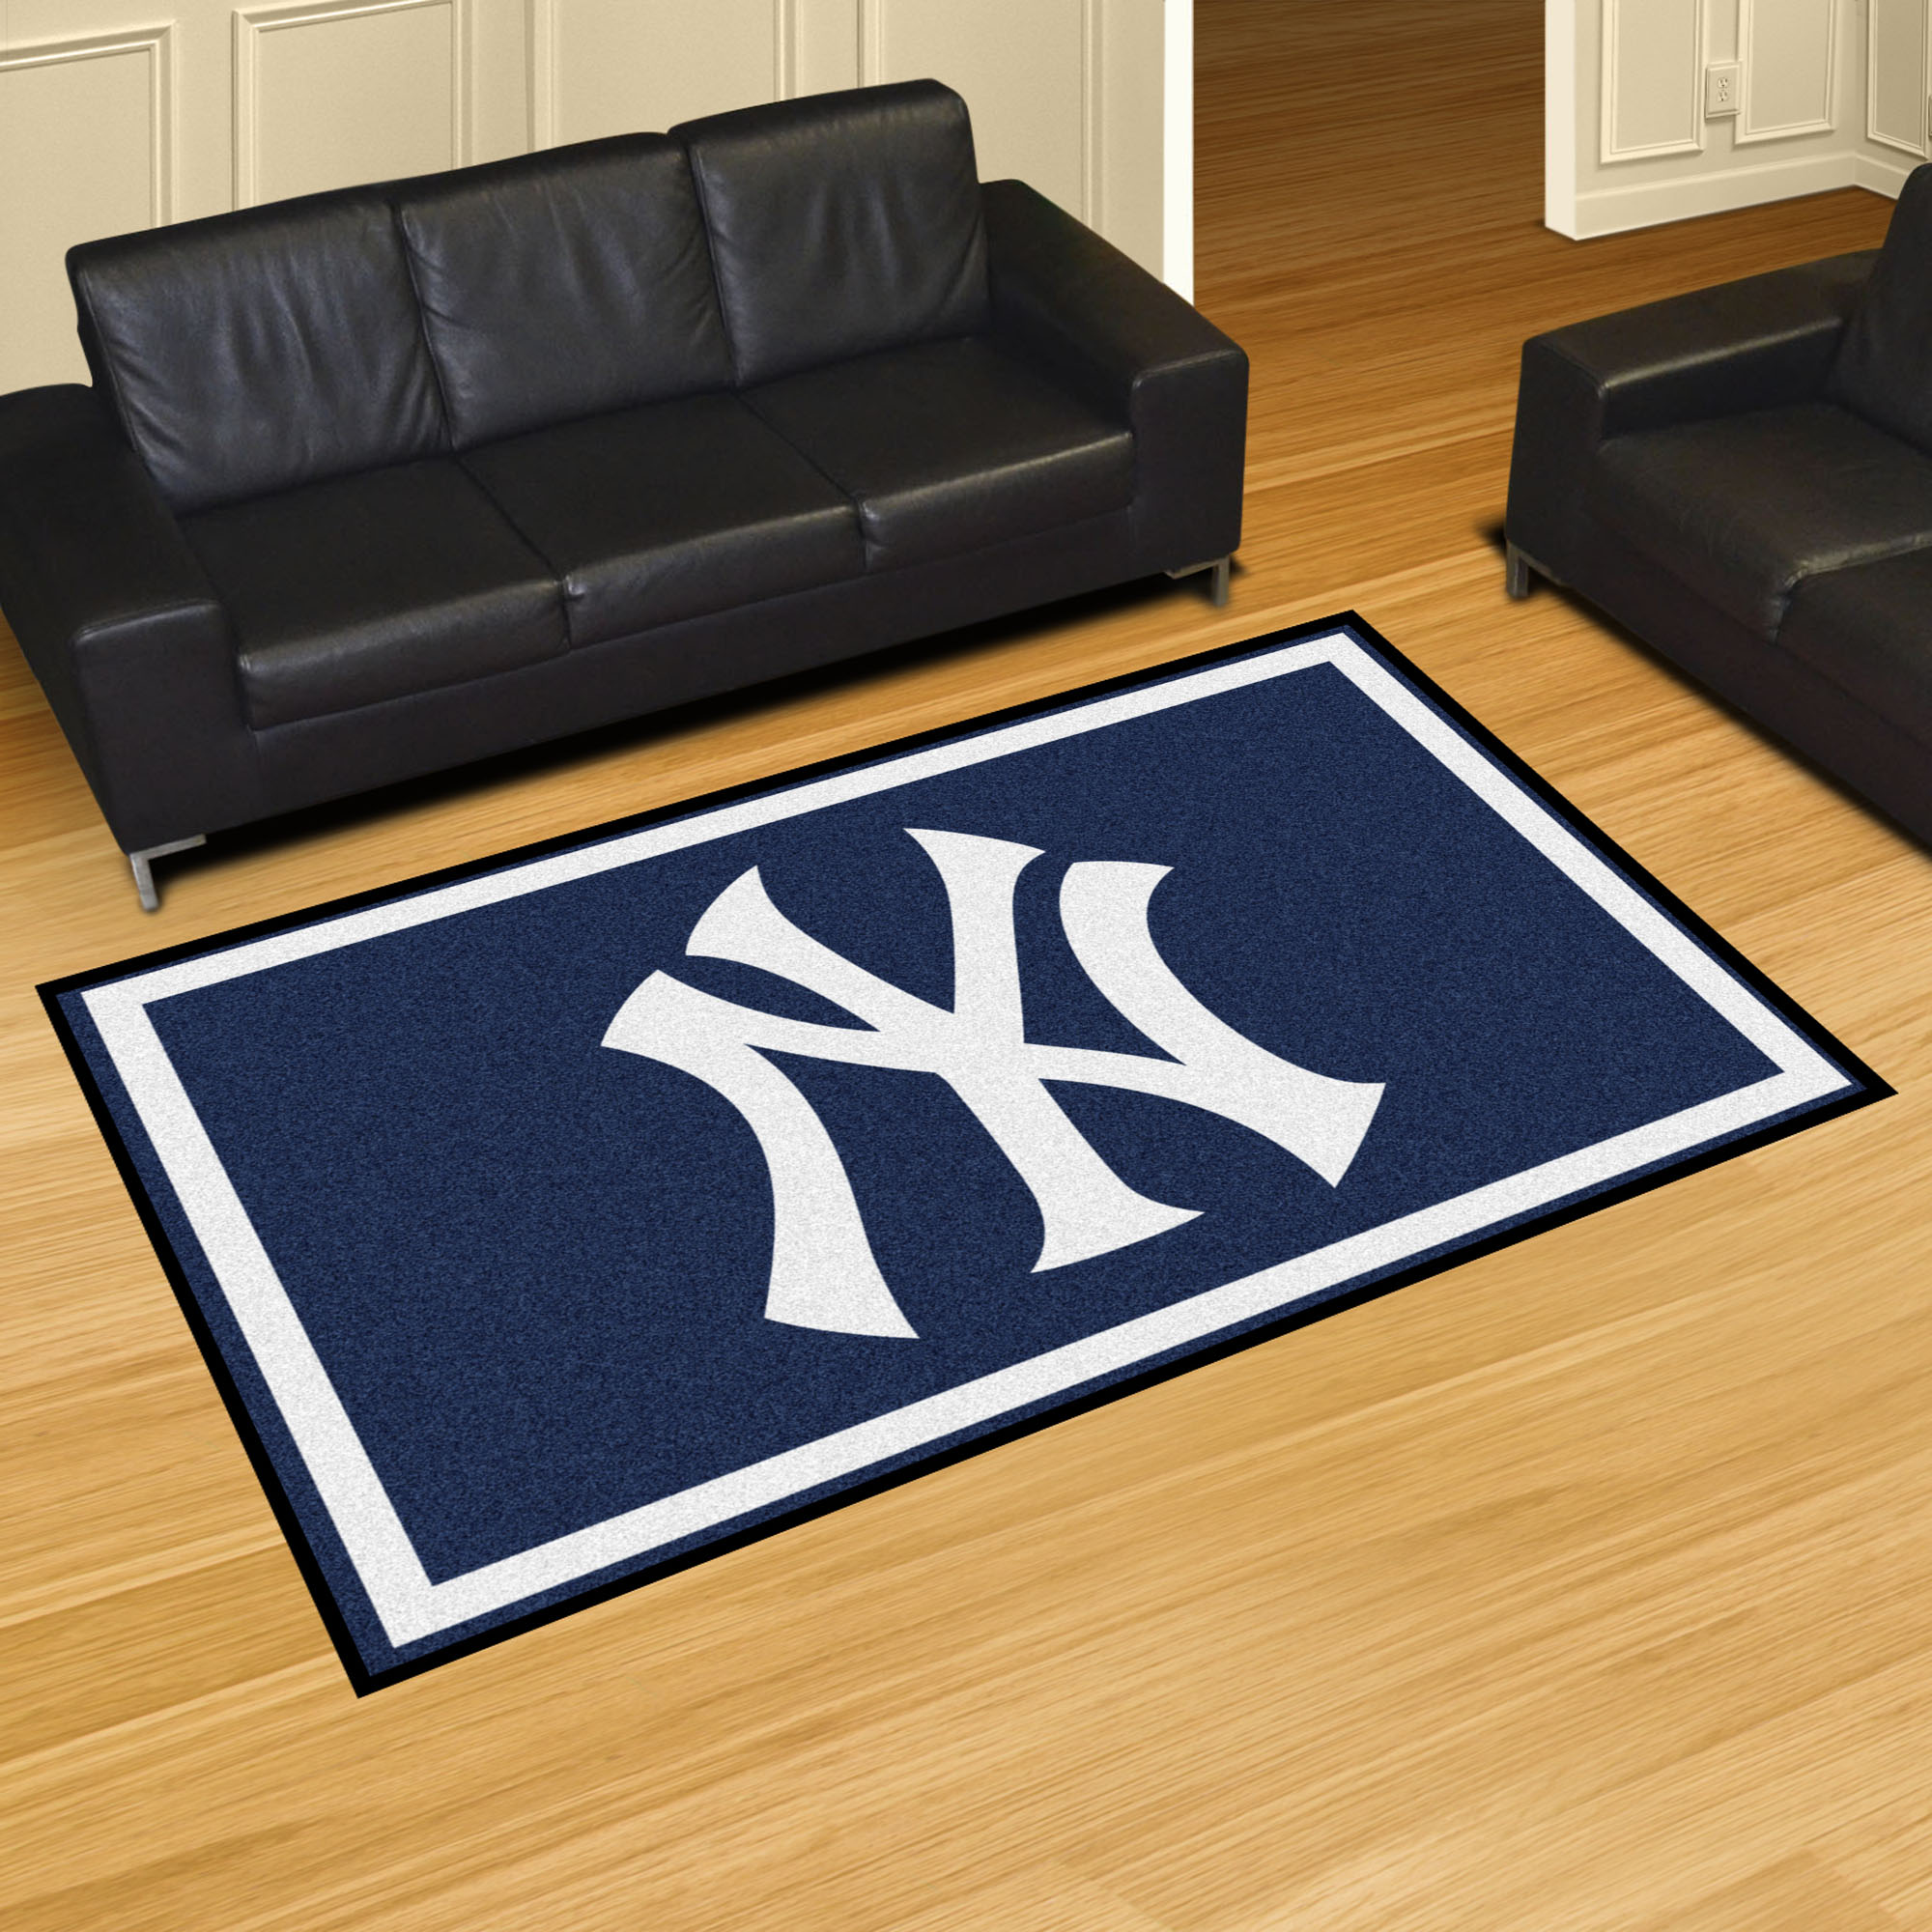 MLB - New York Yankees 5'x8' Rug - image 2 of 2